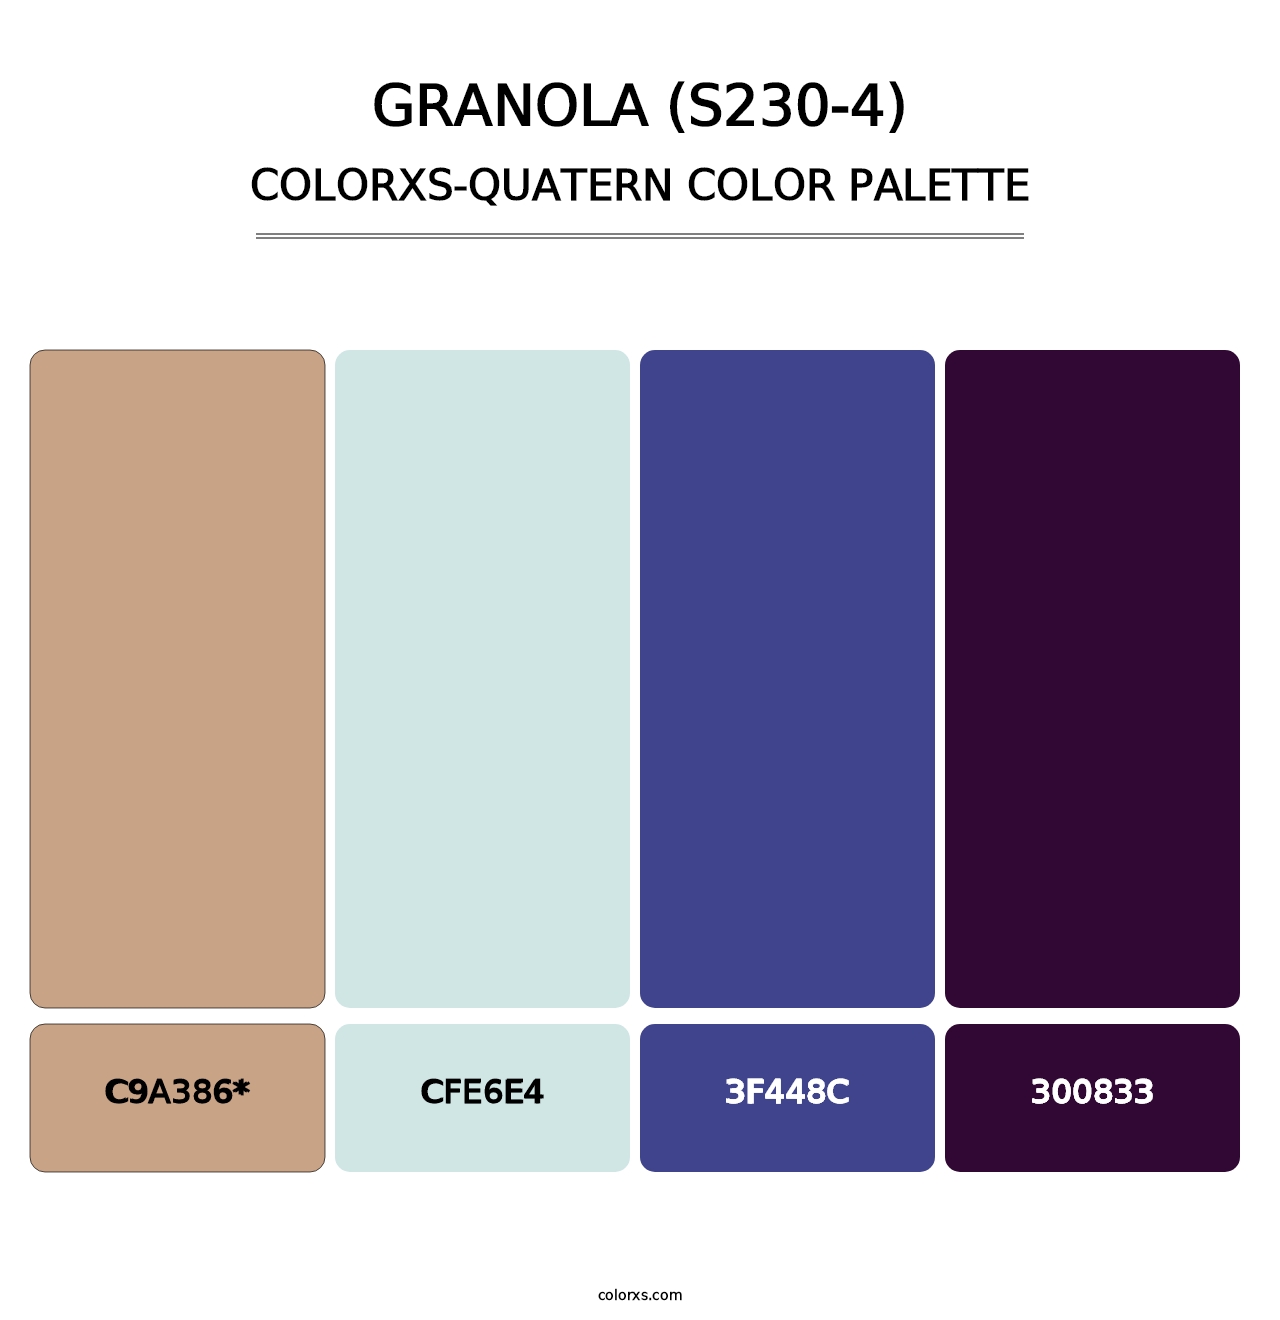 Granola (S230-4) - Colorxs Quatern Palette